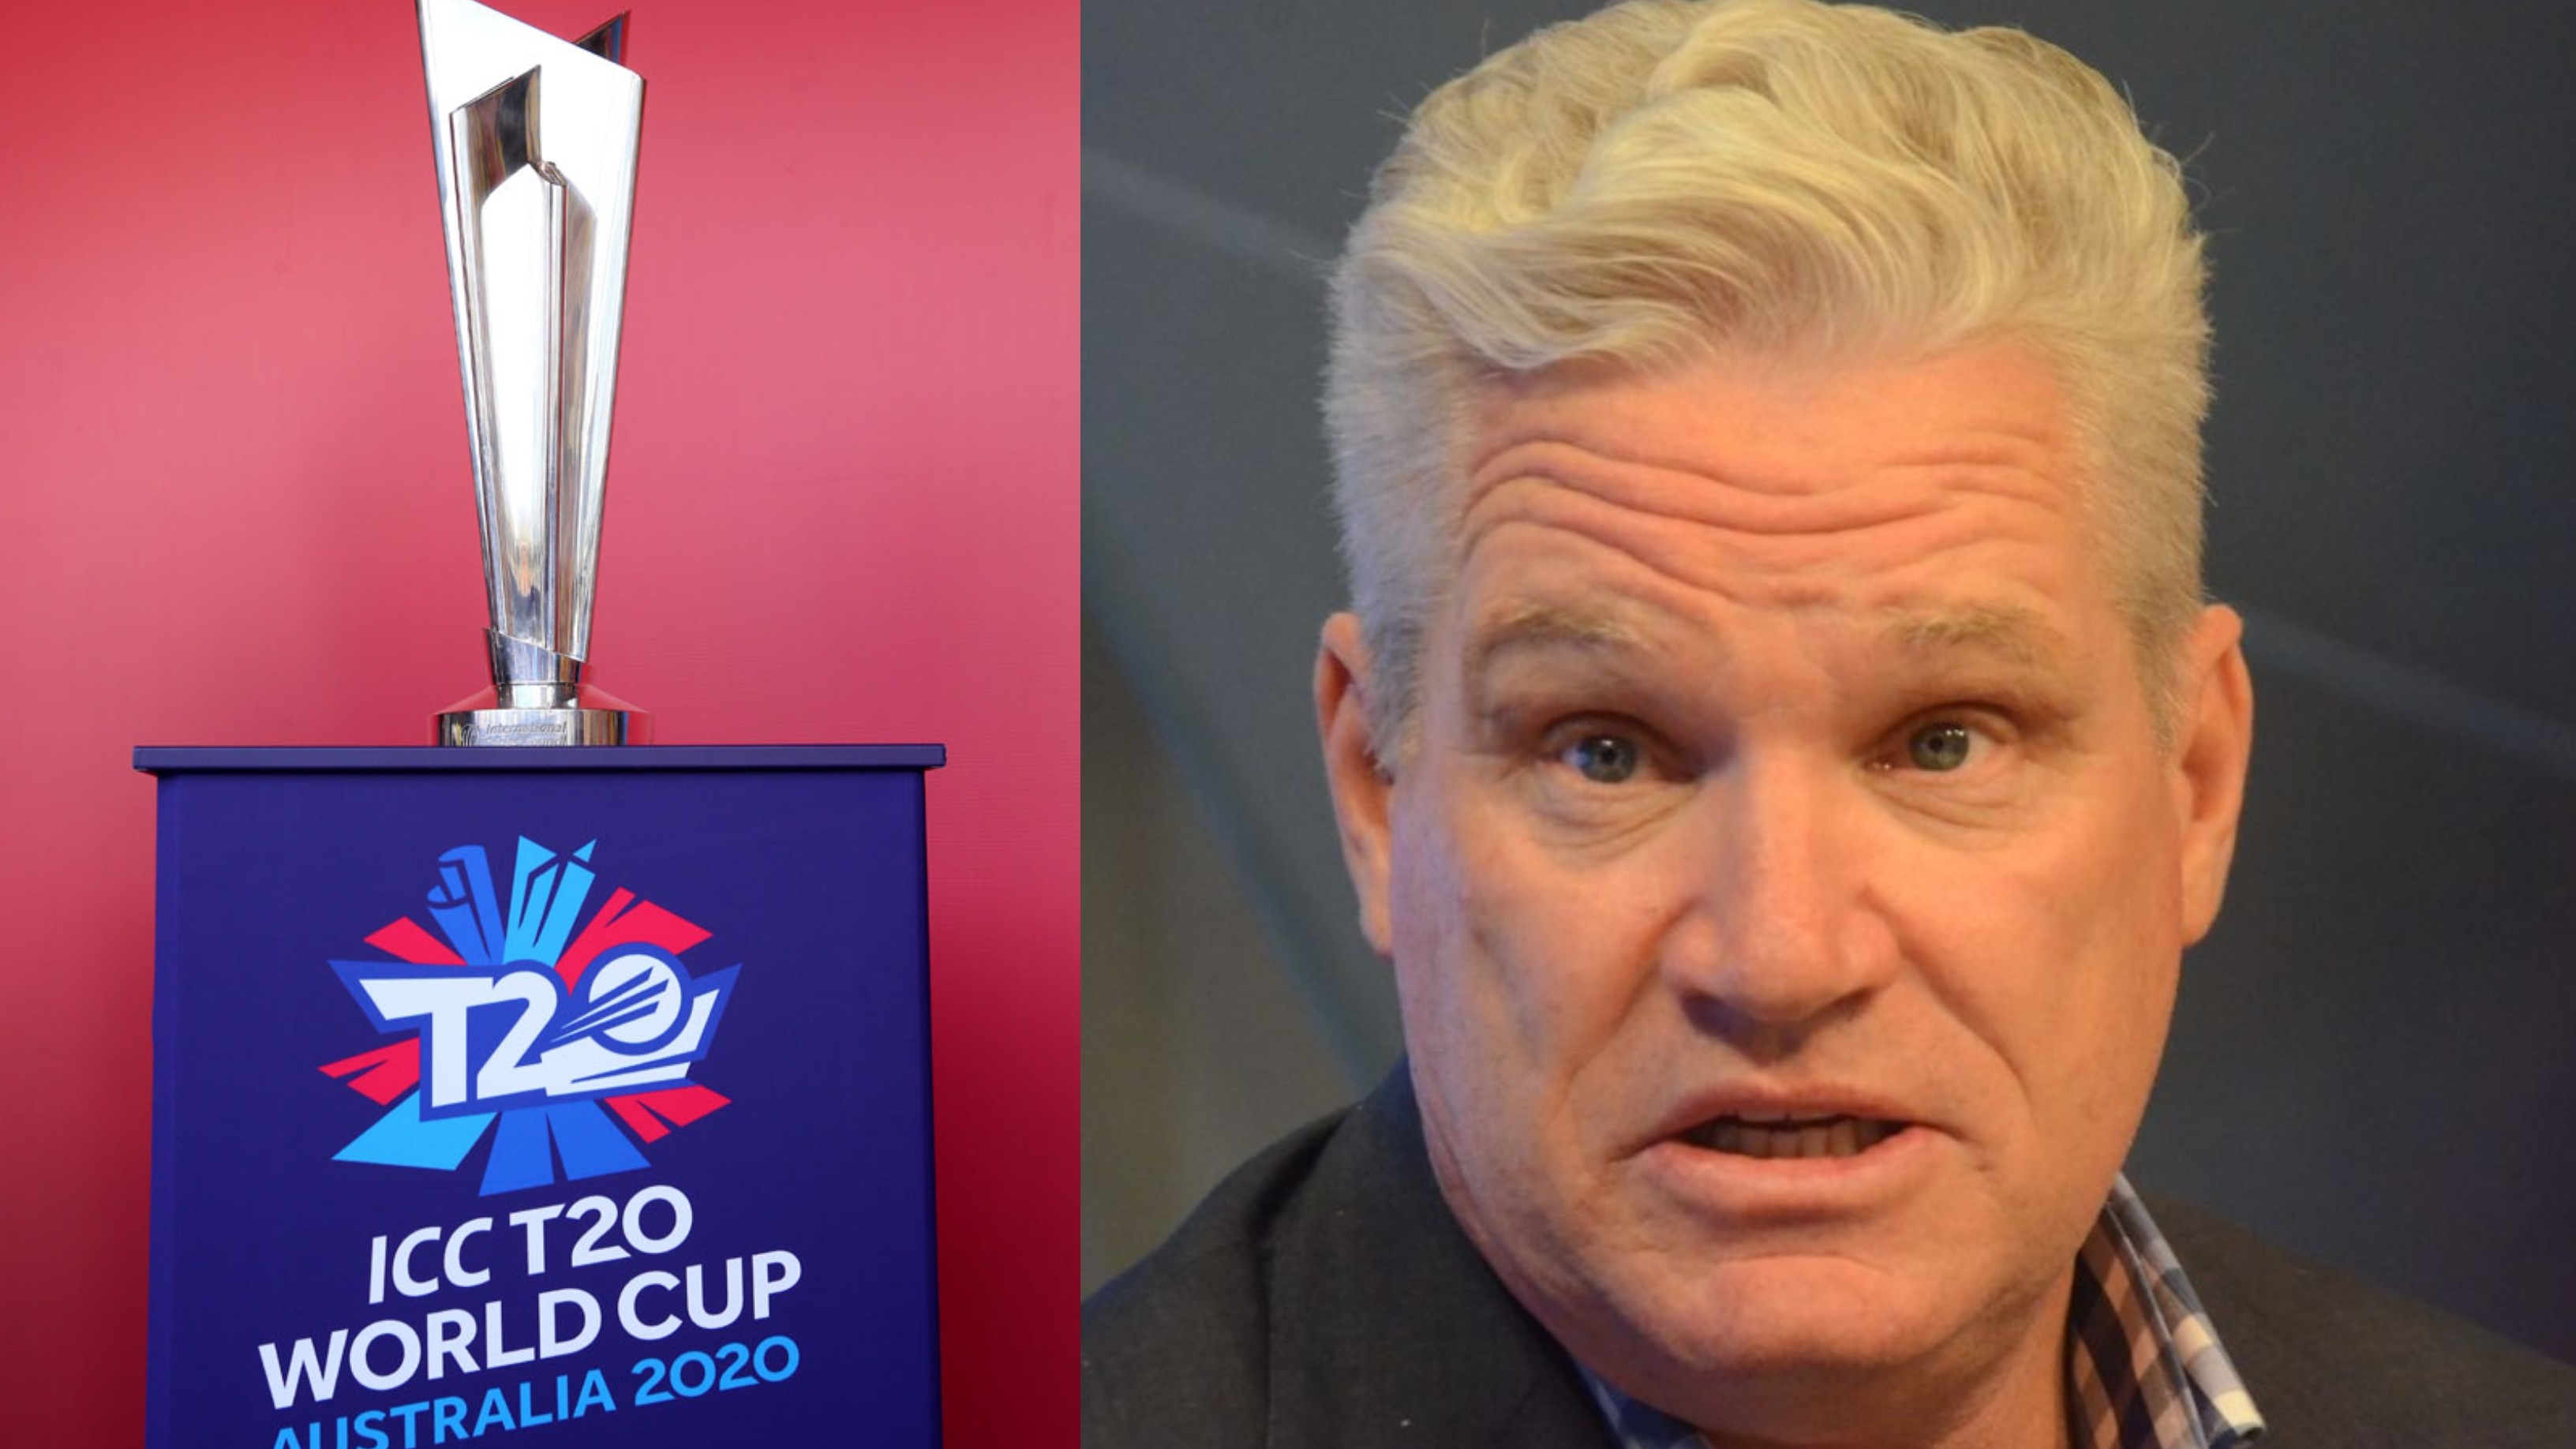 T20 World Cup isn’t going to happen in Australia this year, reckons Dean Jones 